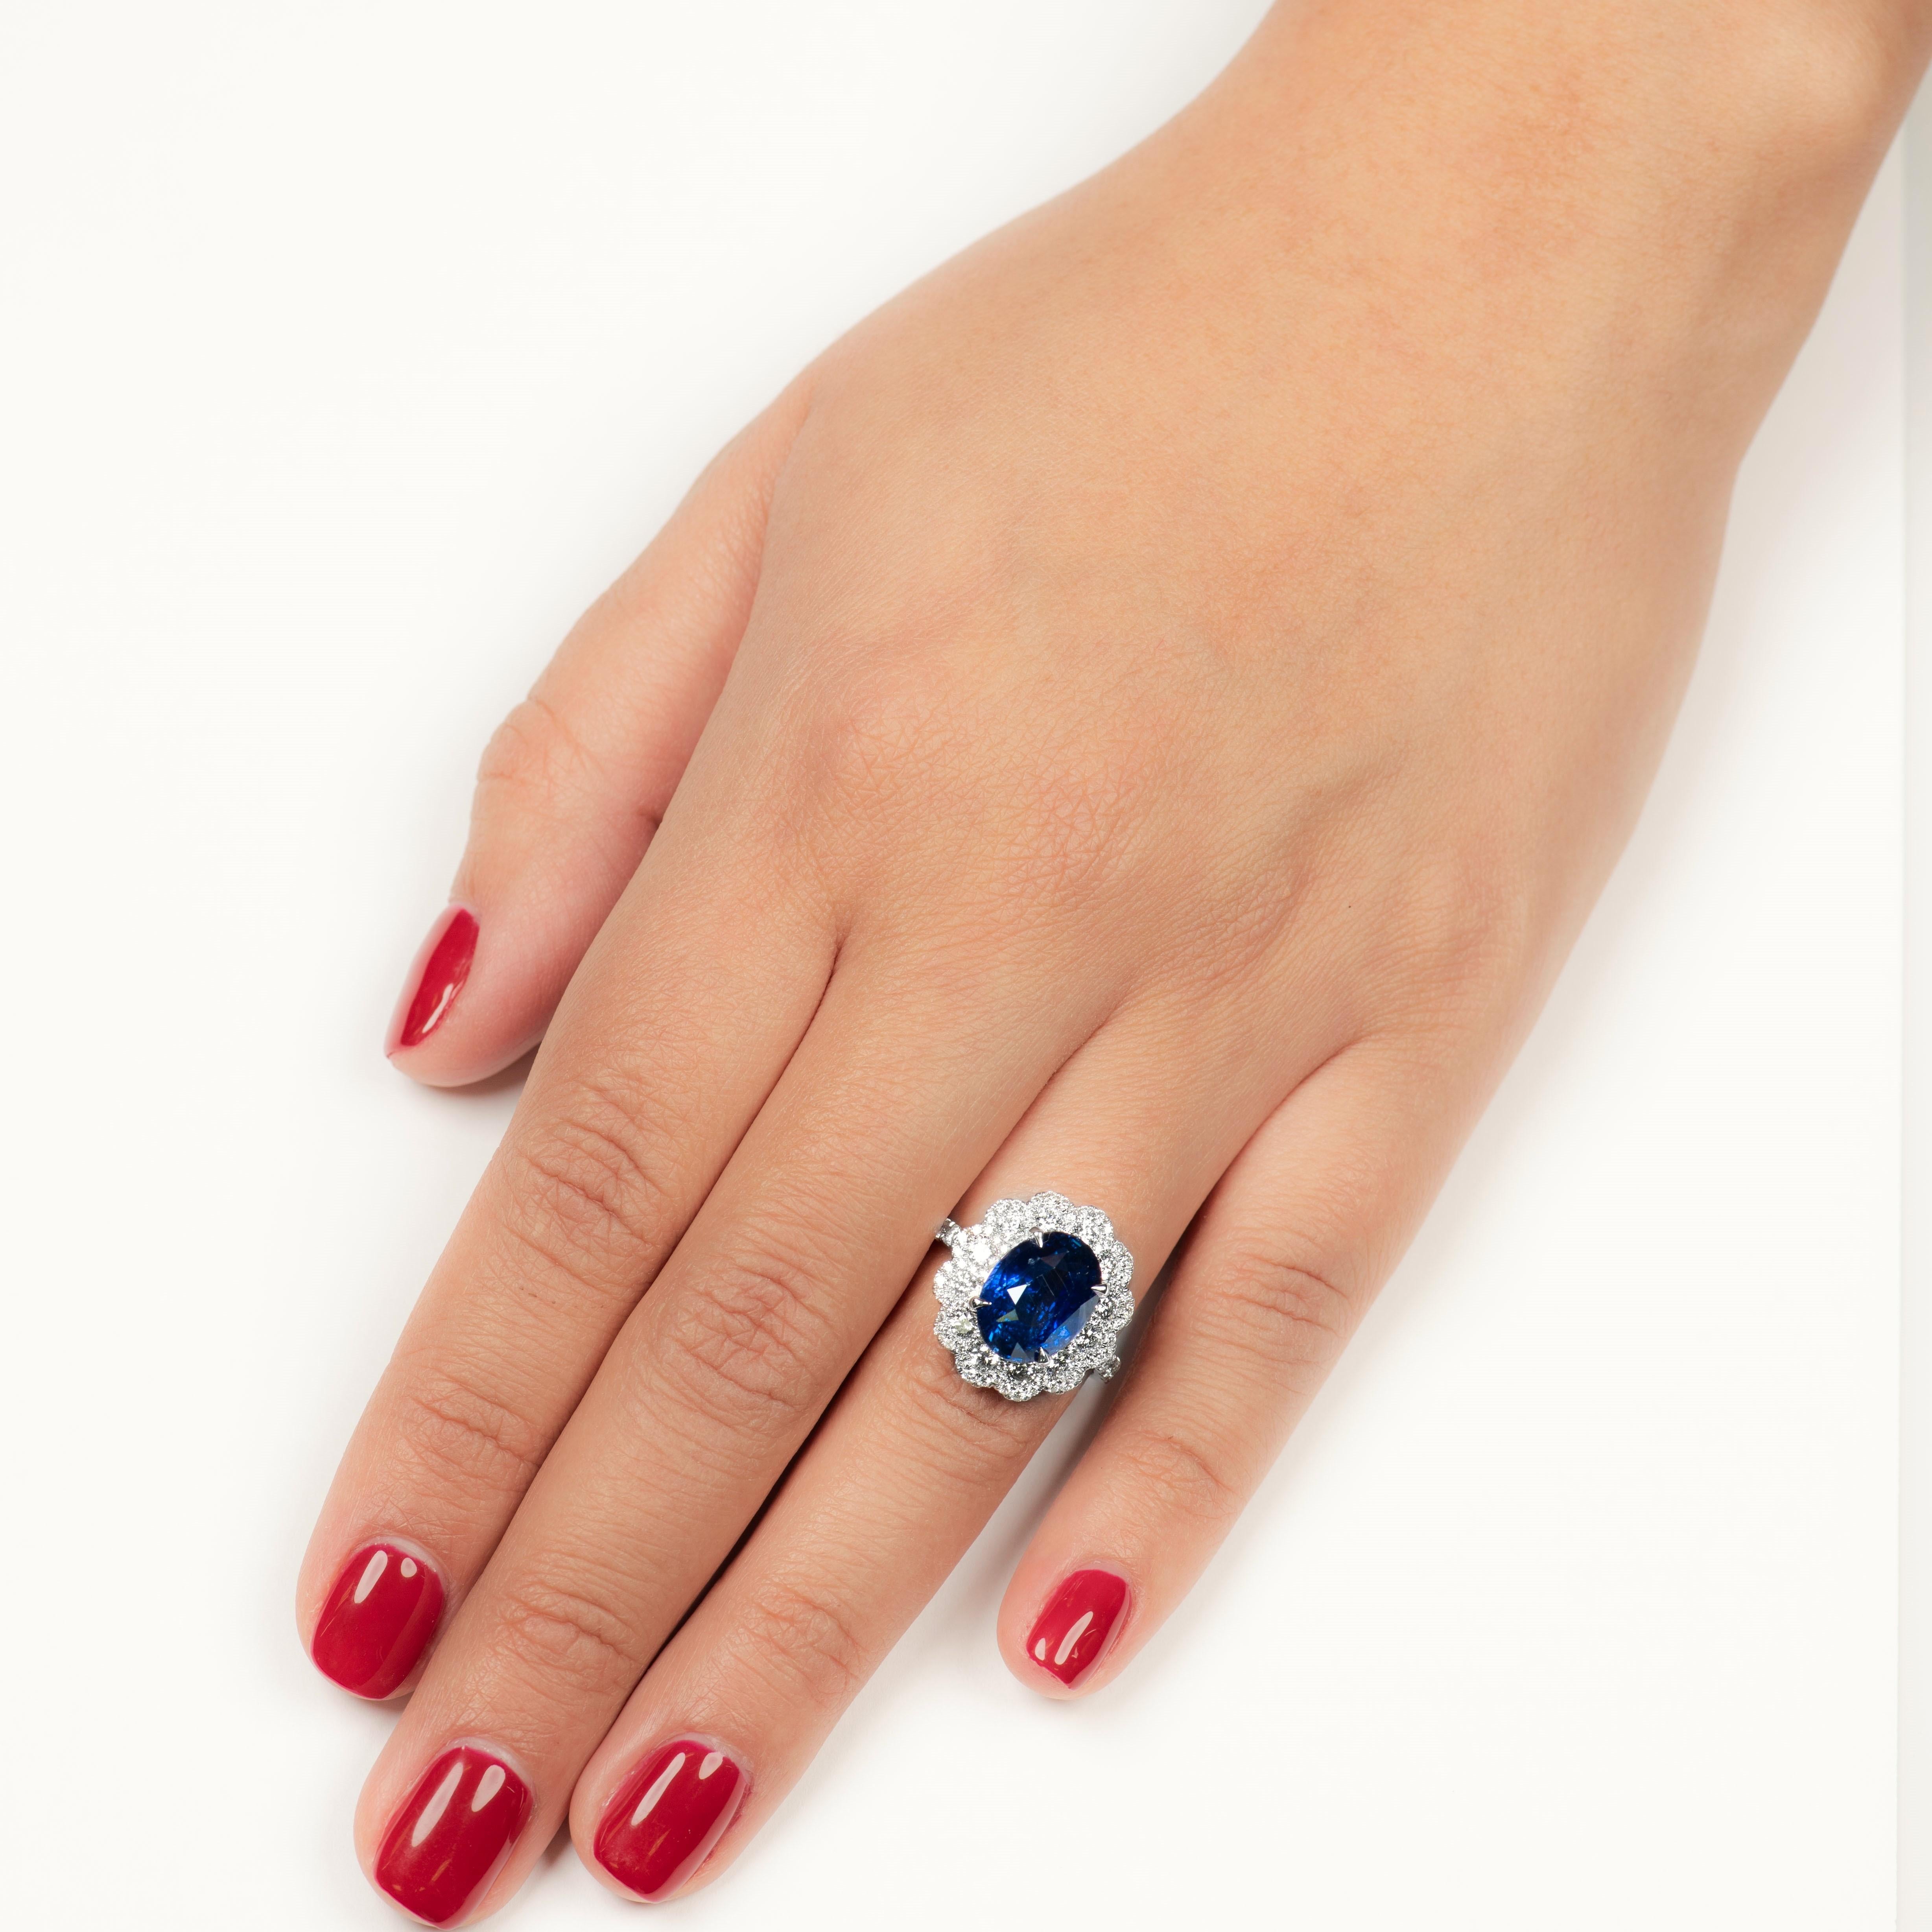 Oval Cut 5.09 Carat Natural Oval Blue Sapphire 'GIA' Flower Style Diamond Ring, 18 Karat